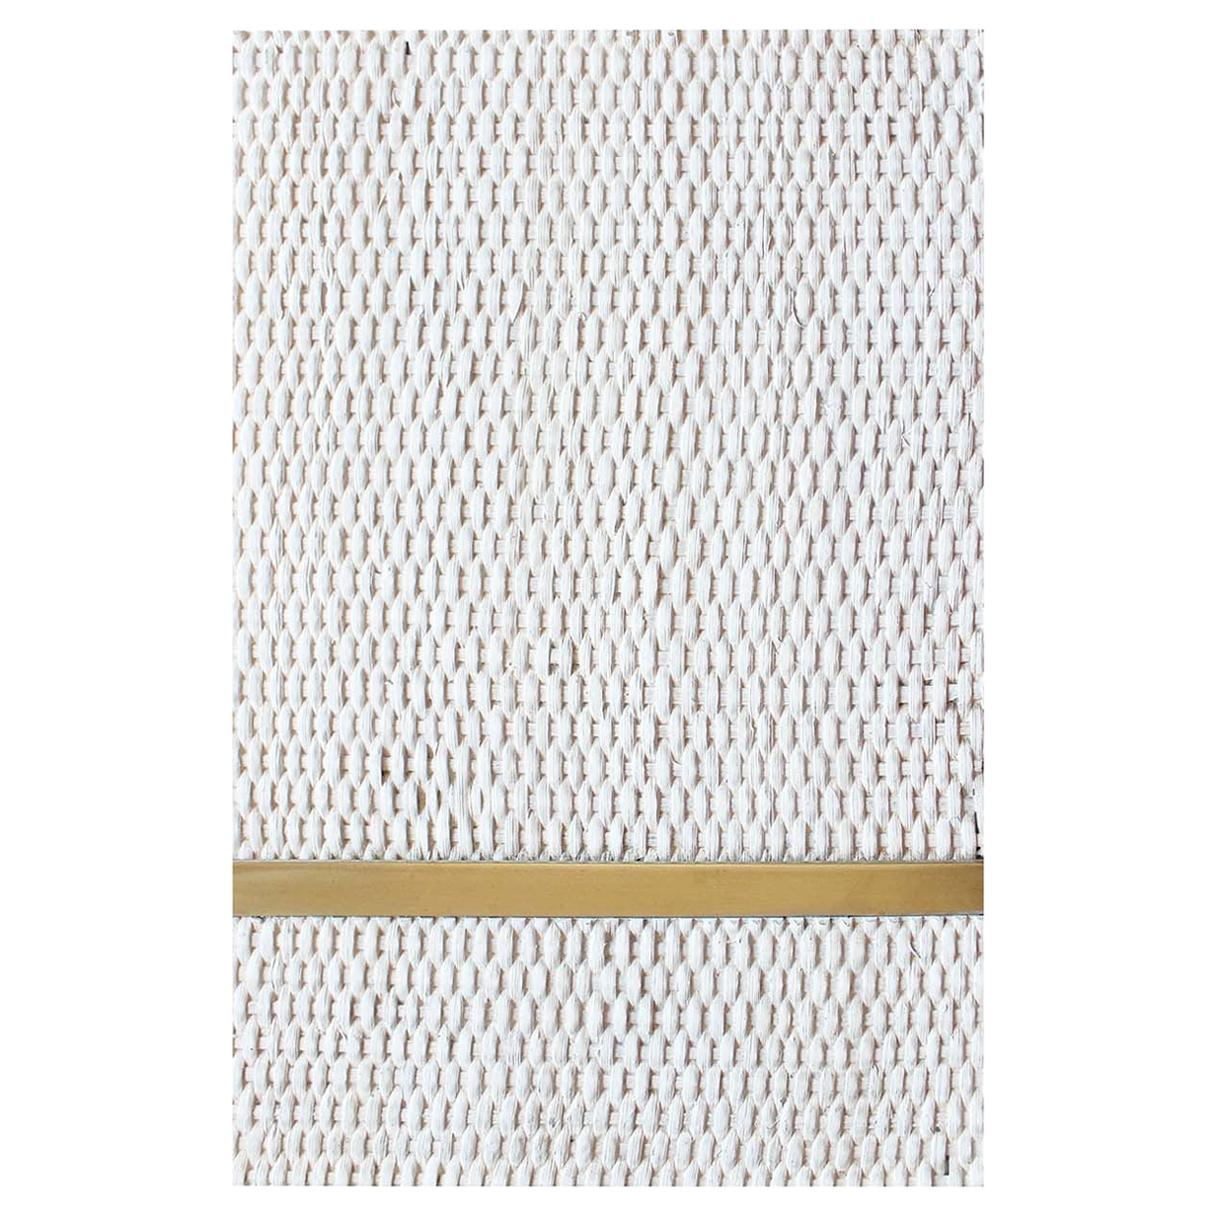 Paille-Intrec Kaf.21 Woven Straw Decorative Panel